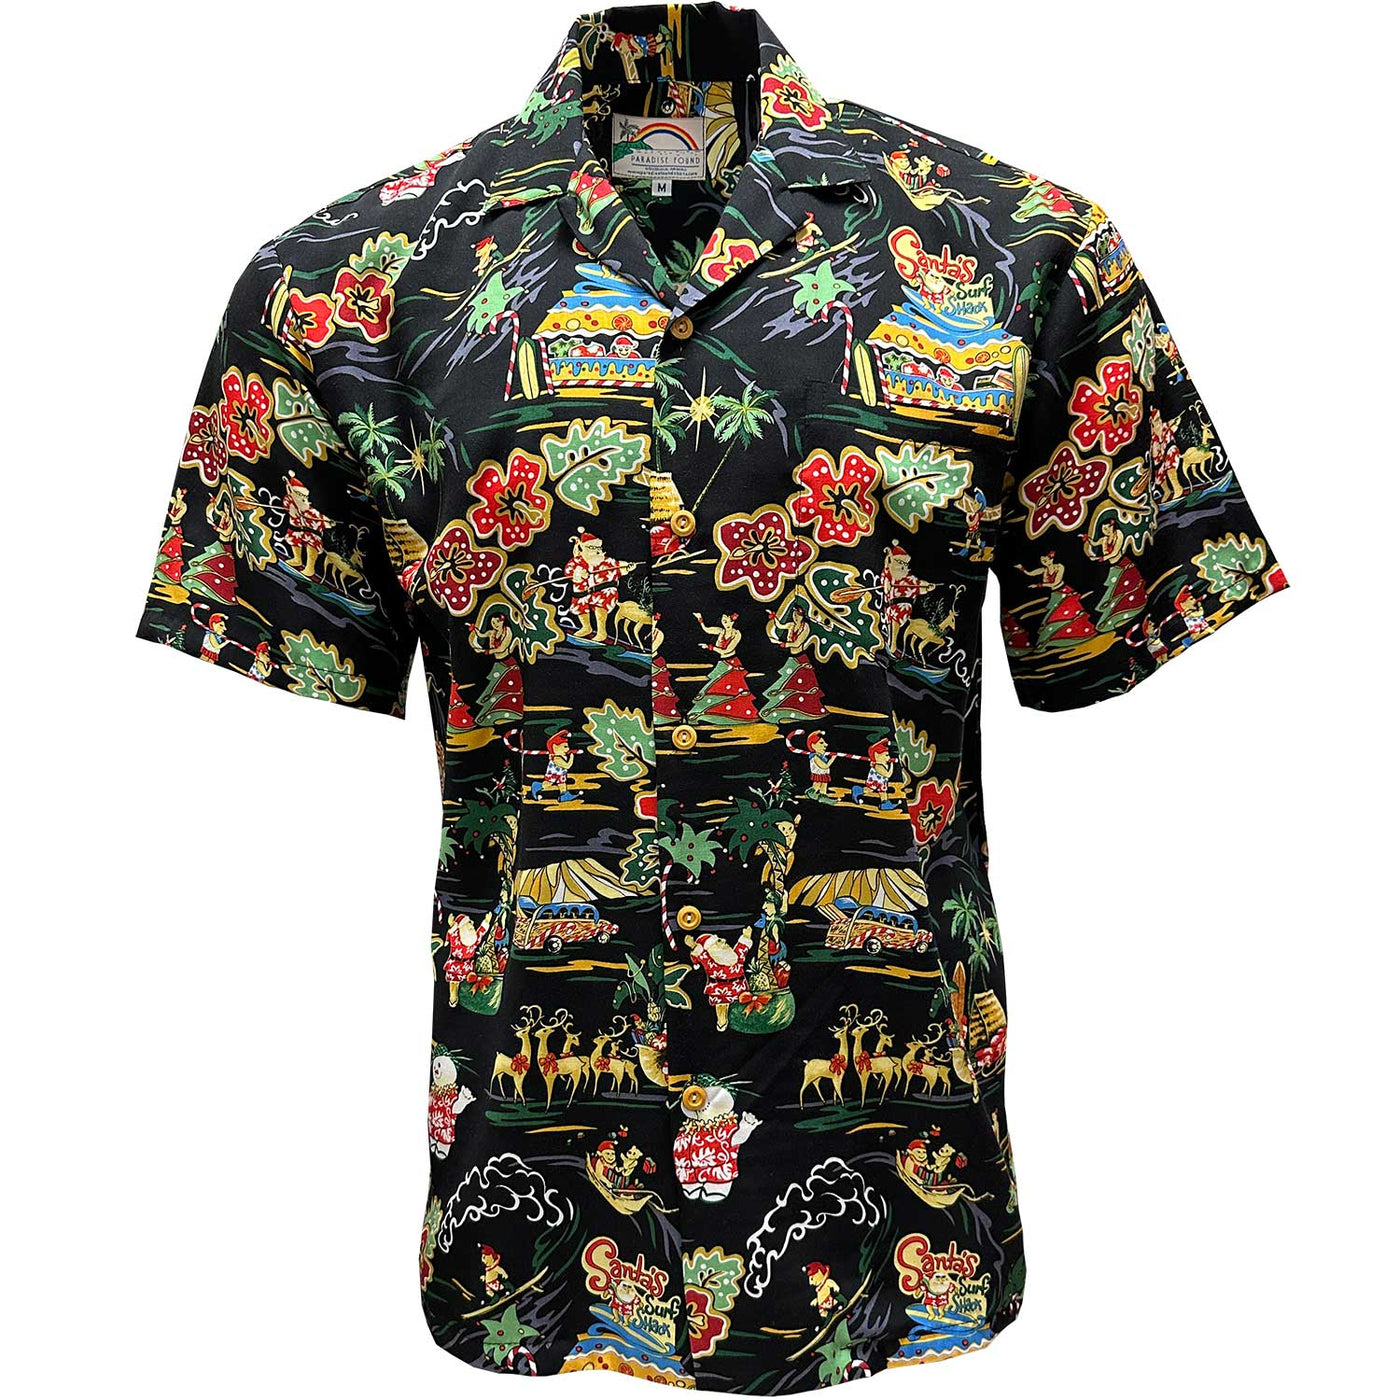 Santa's Surf Shack Black Hawaiian Shirt